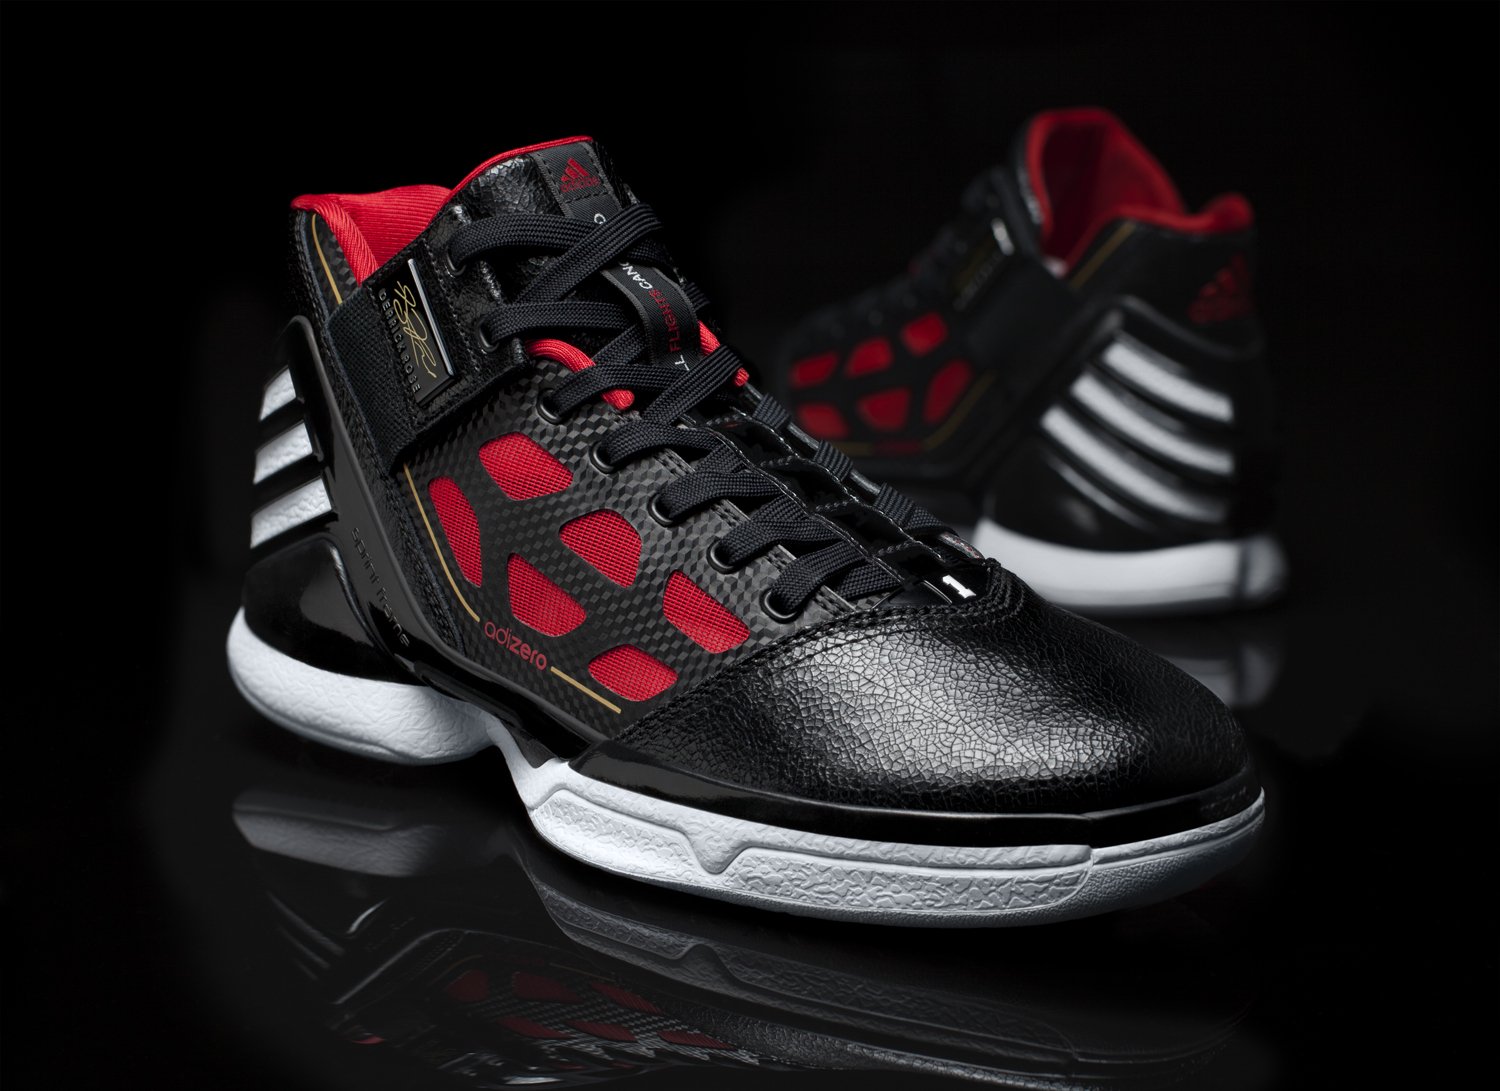 List of Adidas Derrick Rose Signature Shoes - information islnd